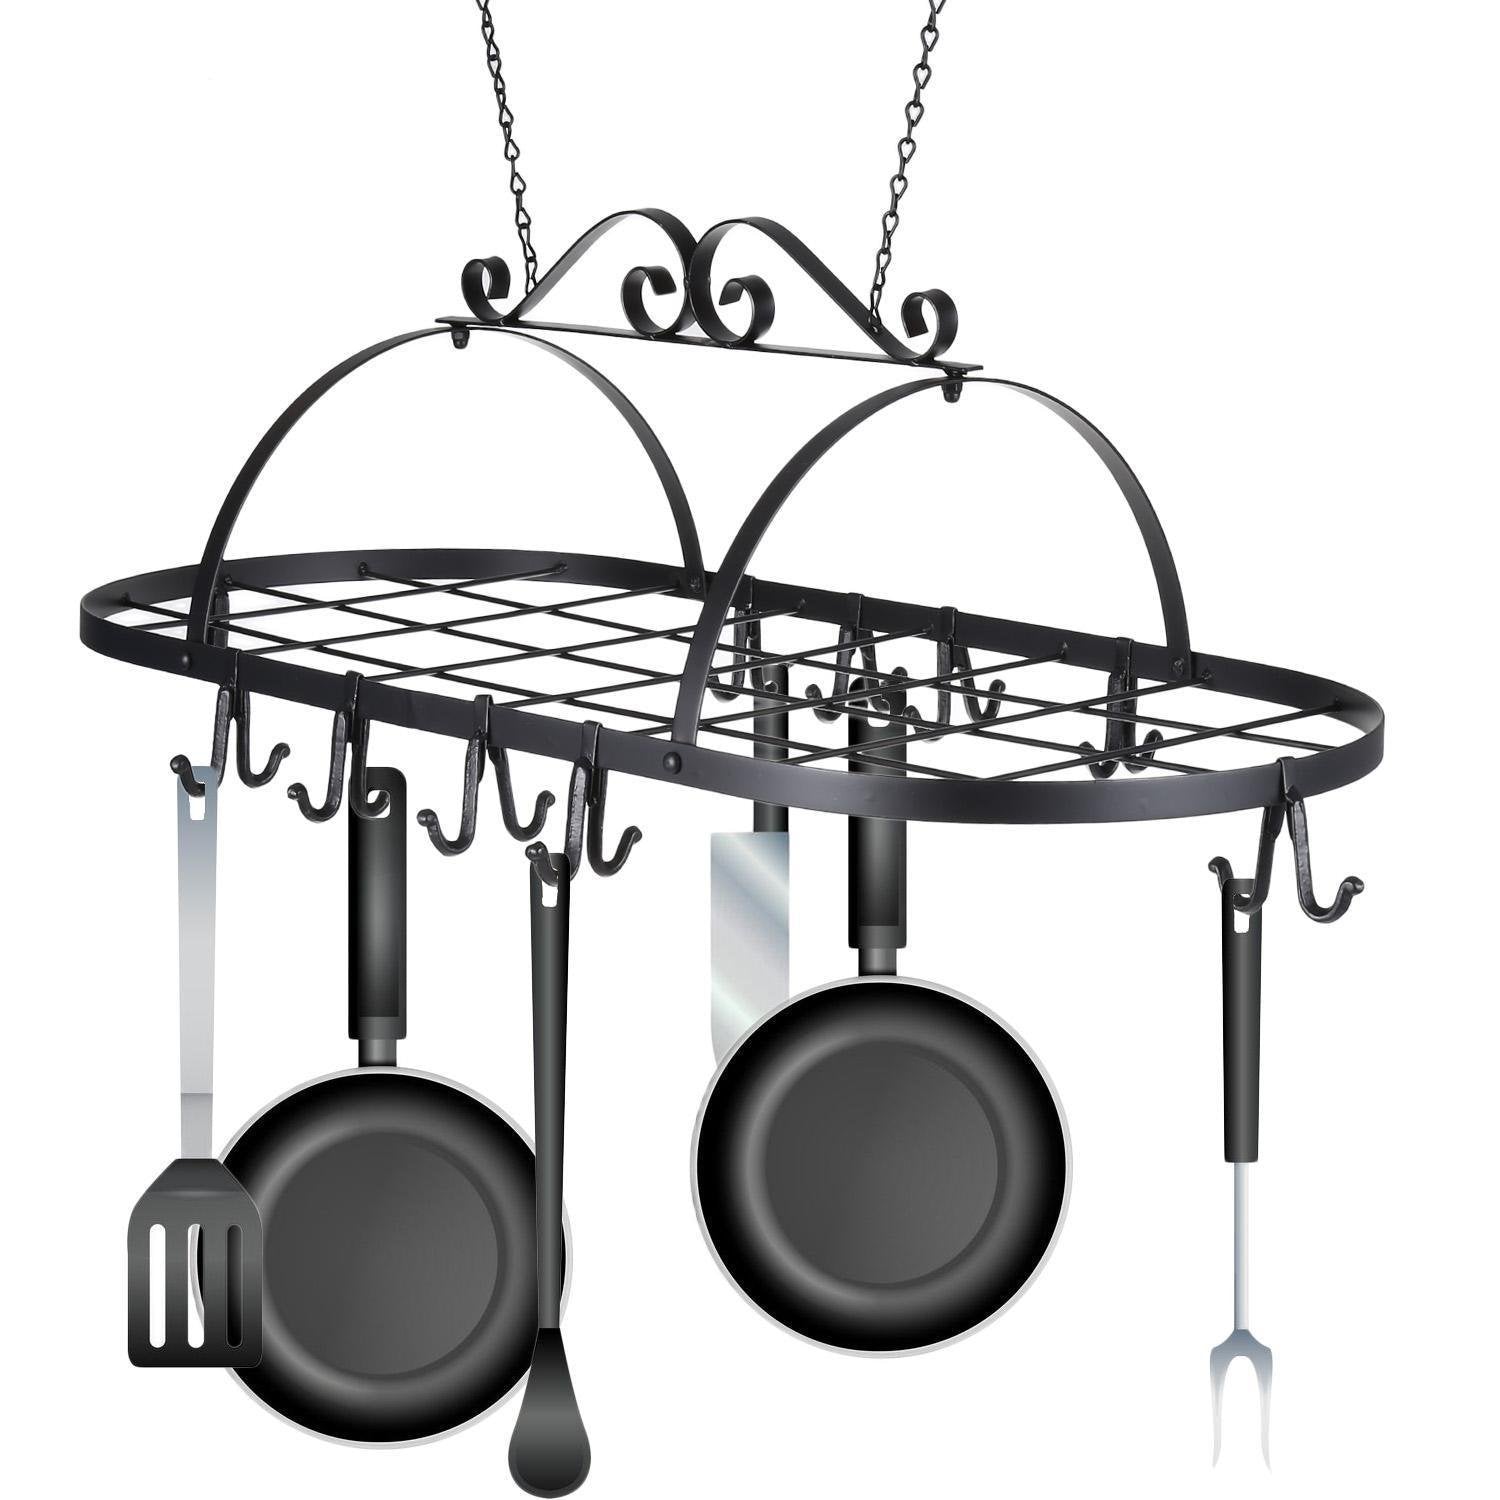 Kaluo Iron Oval Pot Rack, Ceiling Mounted Hanging Kitchen Utensils Pots Pans Holder Hanger Rack